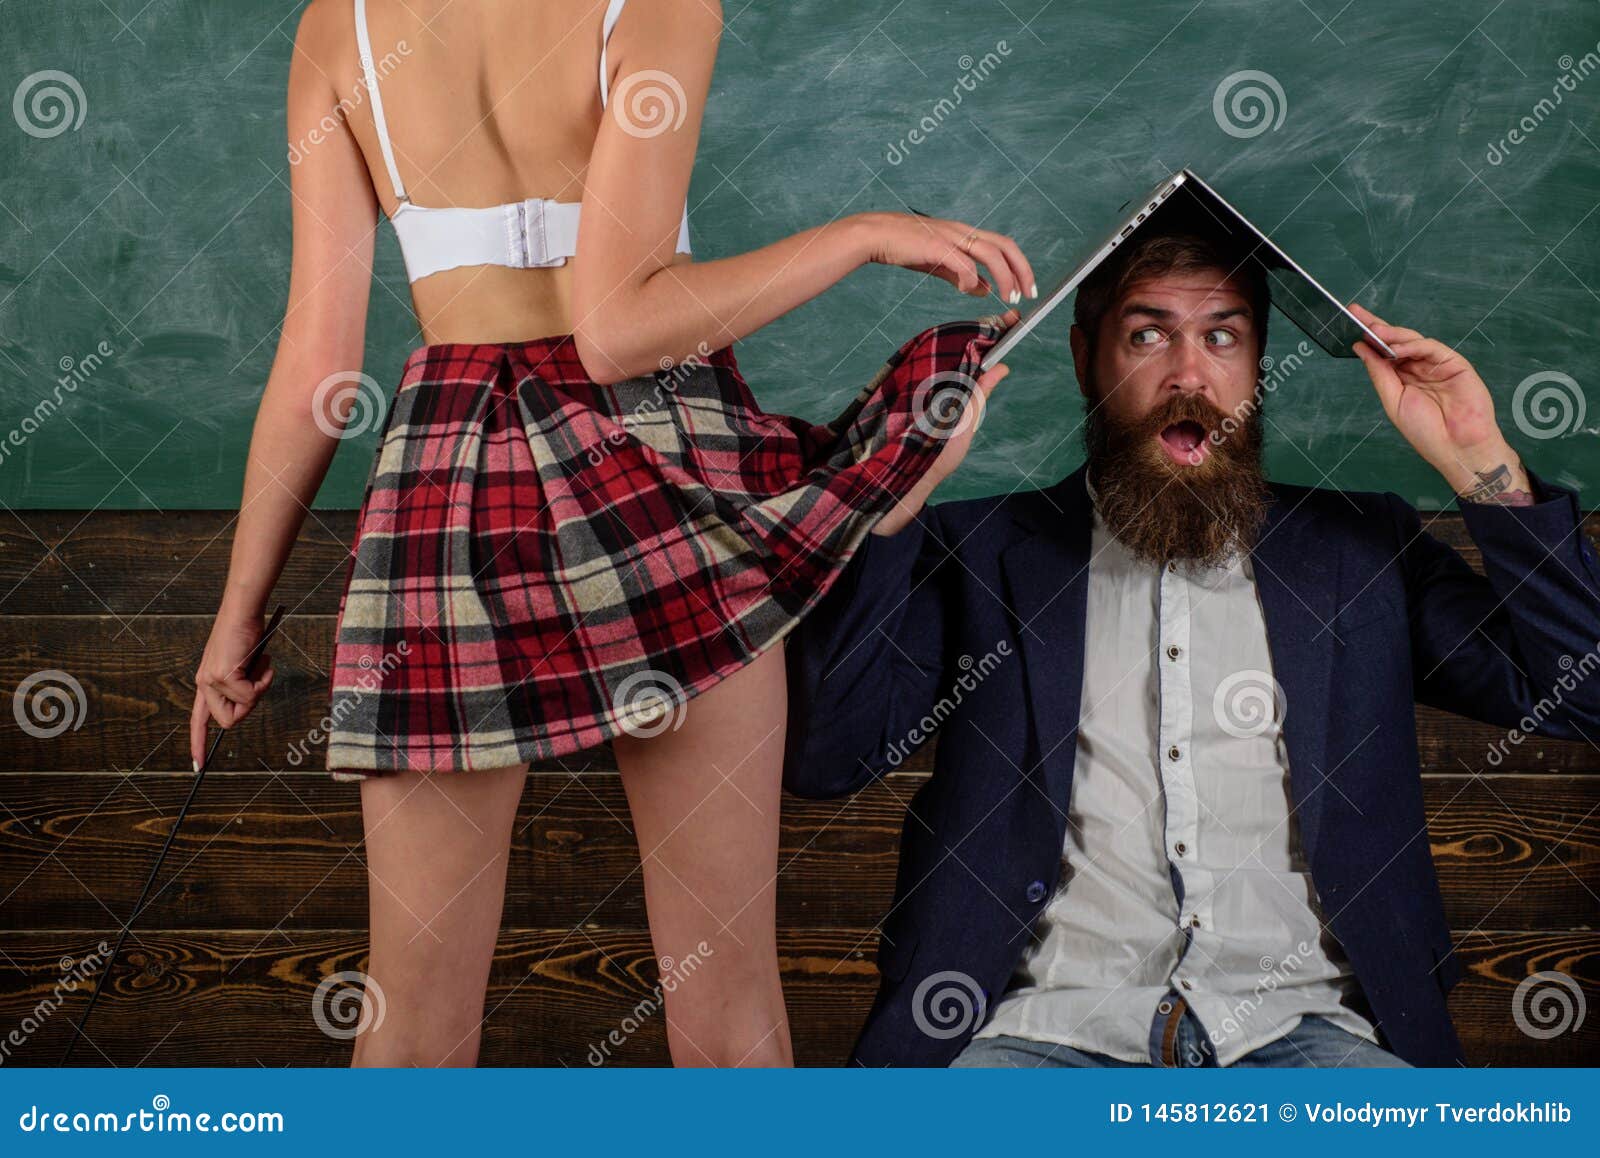 School Teacher Sixi Videos - Sex Education. Guy Laptop Erotic Video. Man Experienced Bearded Teacher and  Seductive Female Buttocks Stock Image - Image of couple, lesson: 145812621